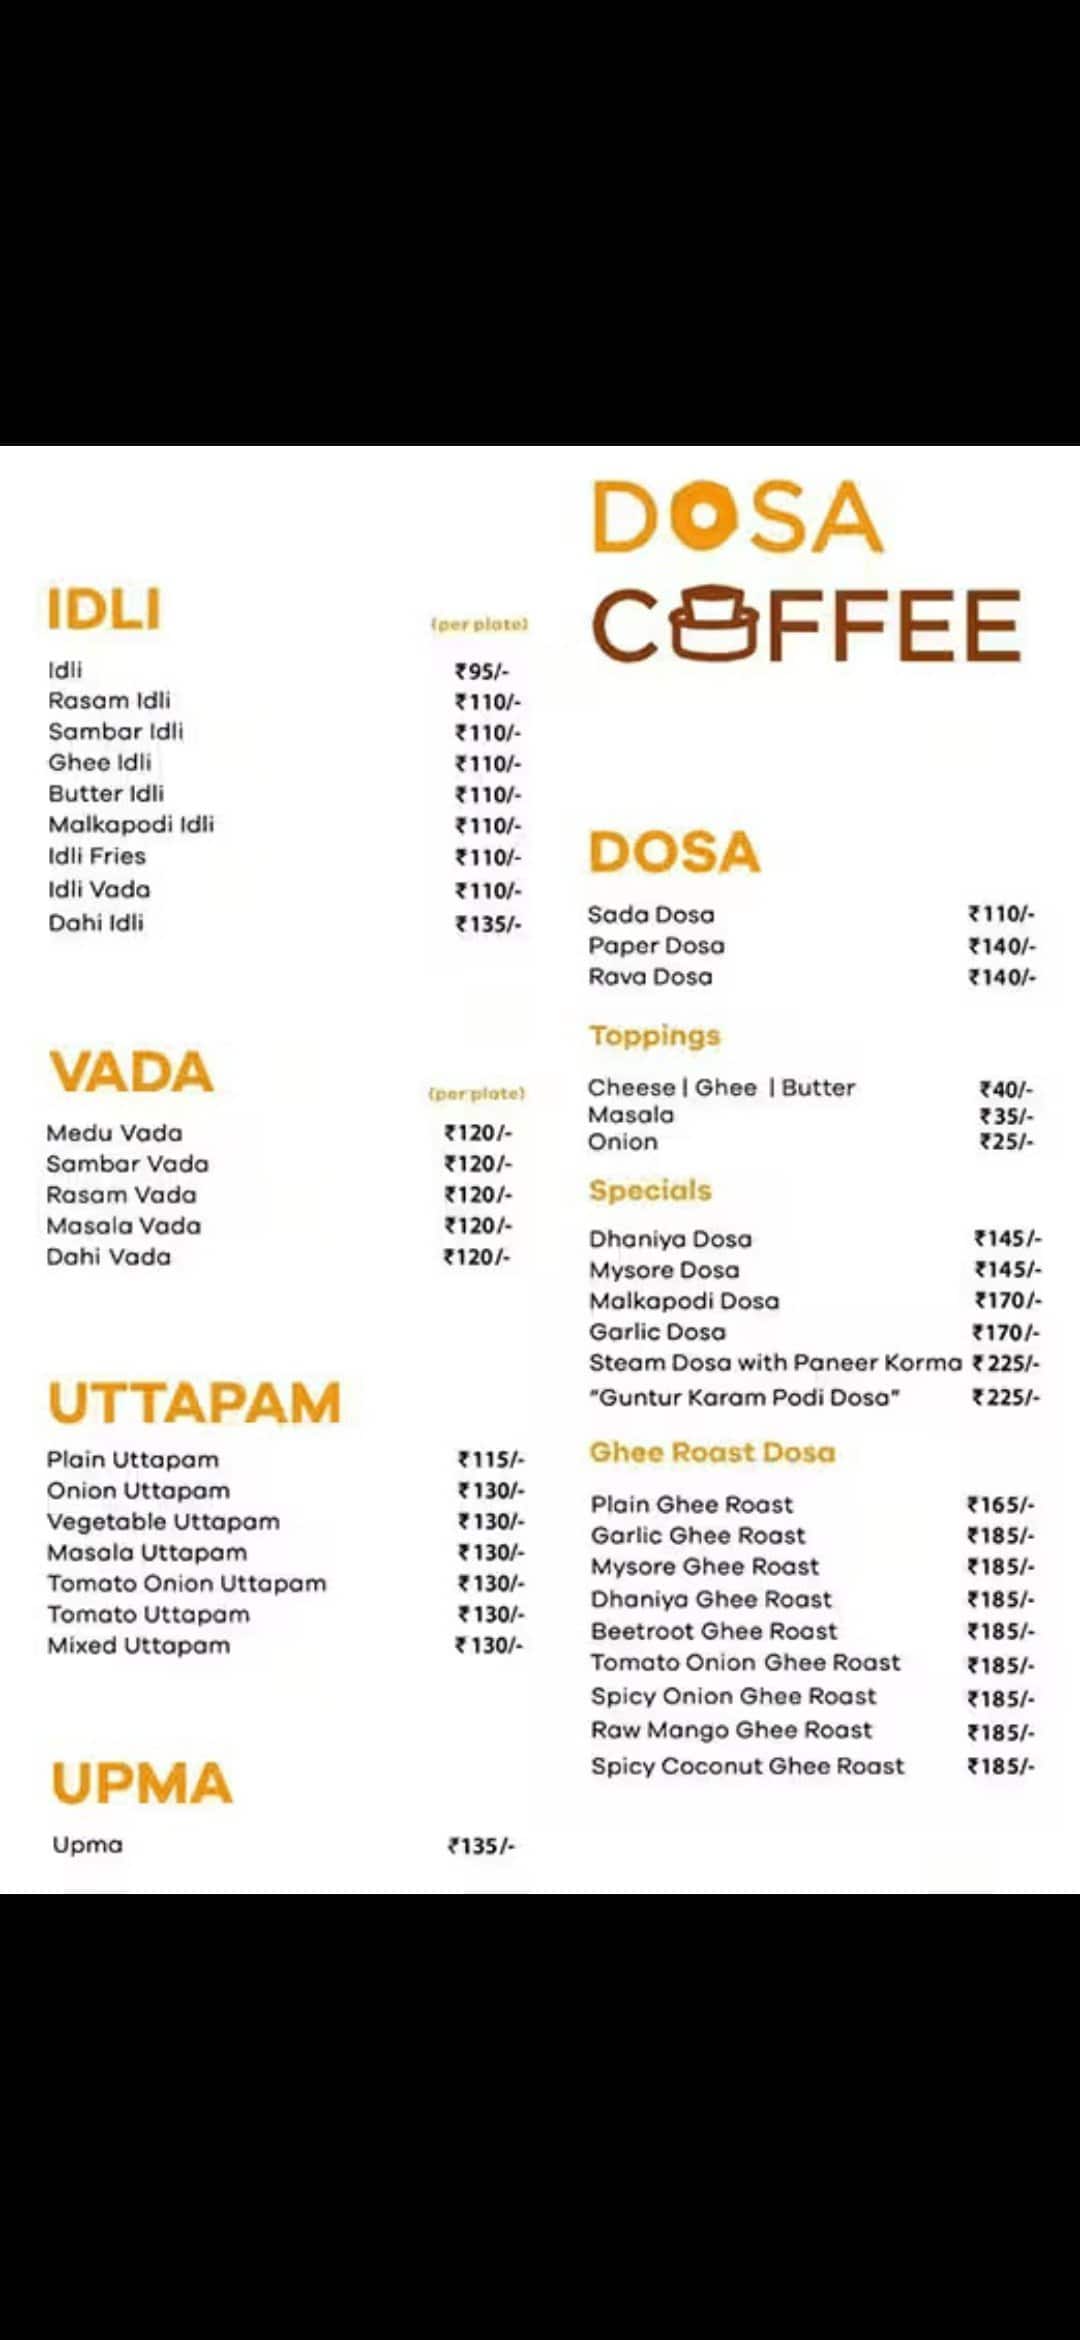 Dosa Coffee, Sector 3, Salt Lake order online - Zomato